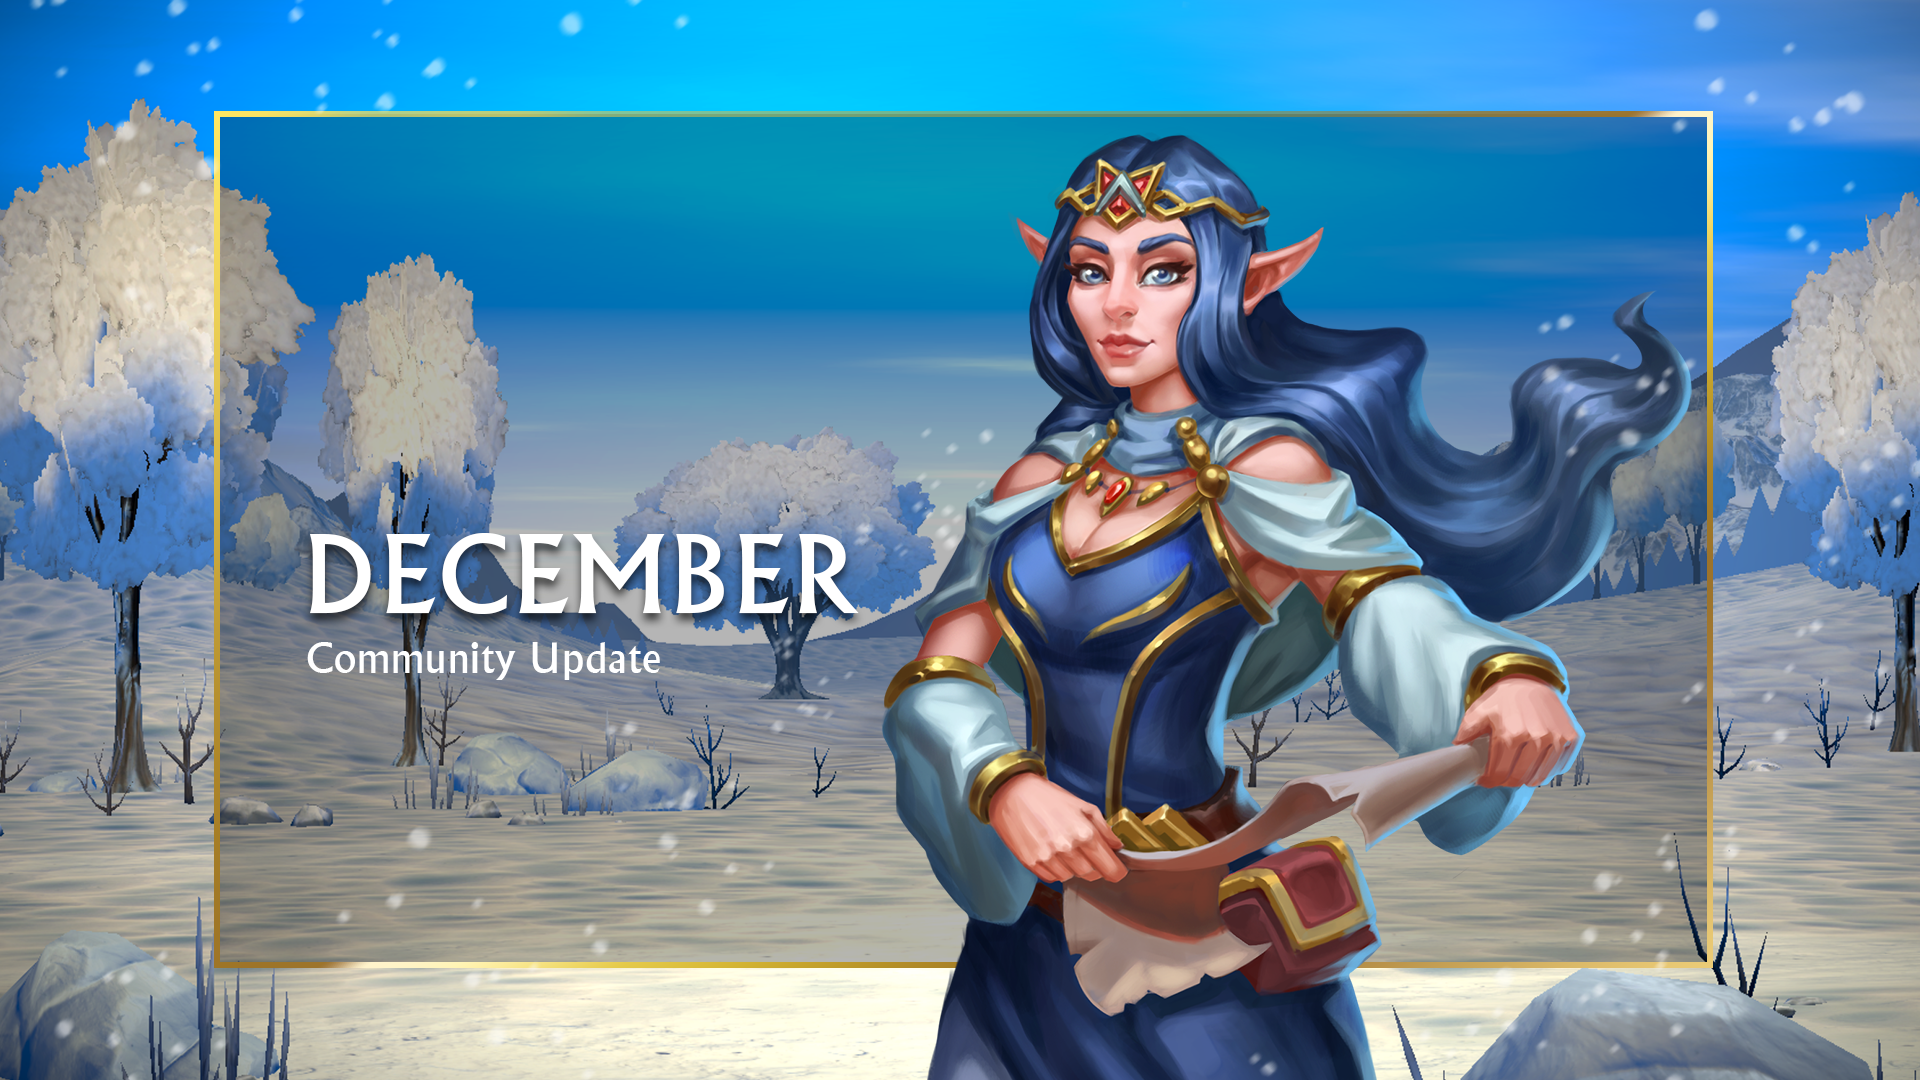 December Community Update